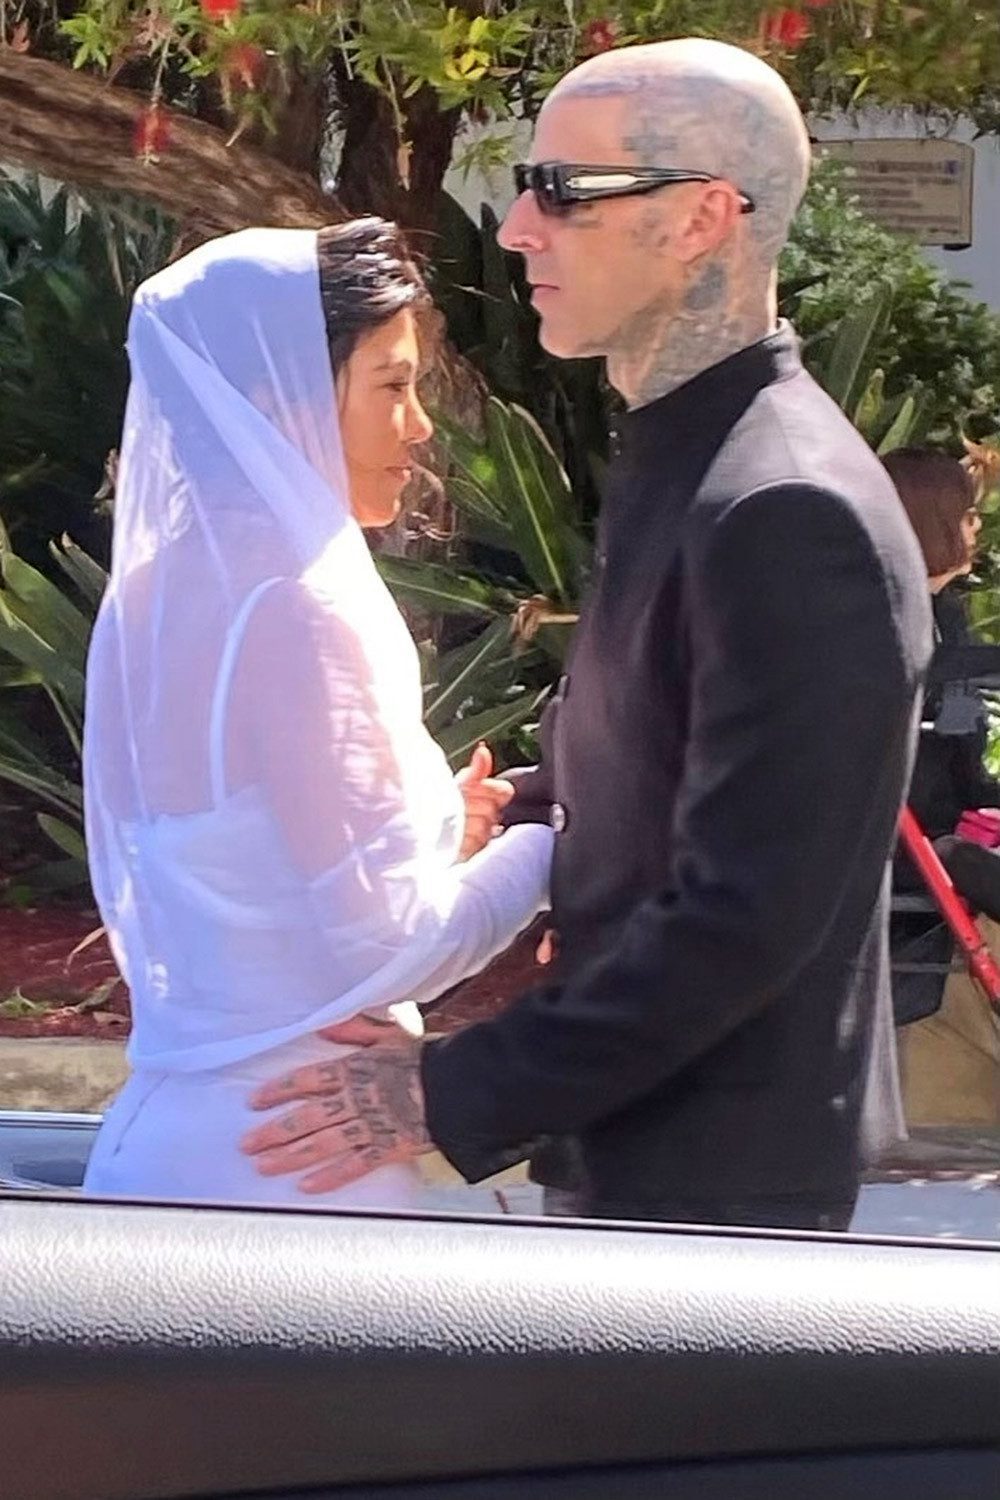 Kourtney Kardashian and Travis Barker get legally married in Santa Barbara (photos)